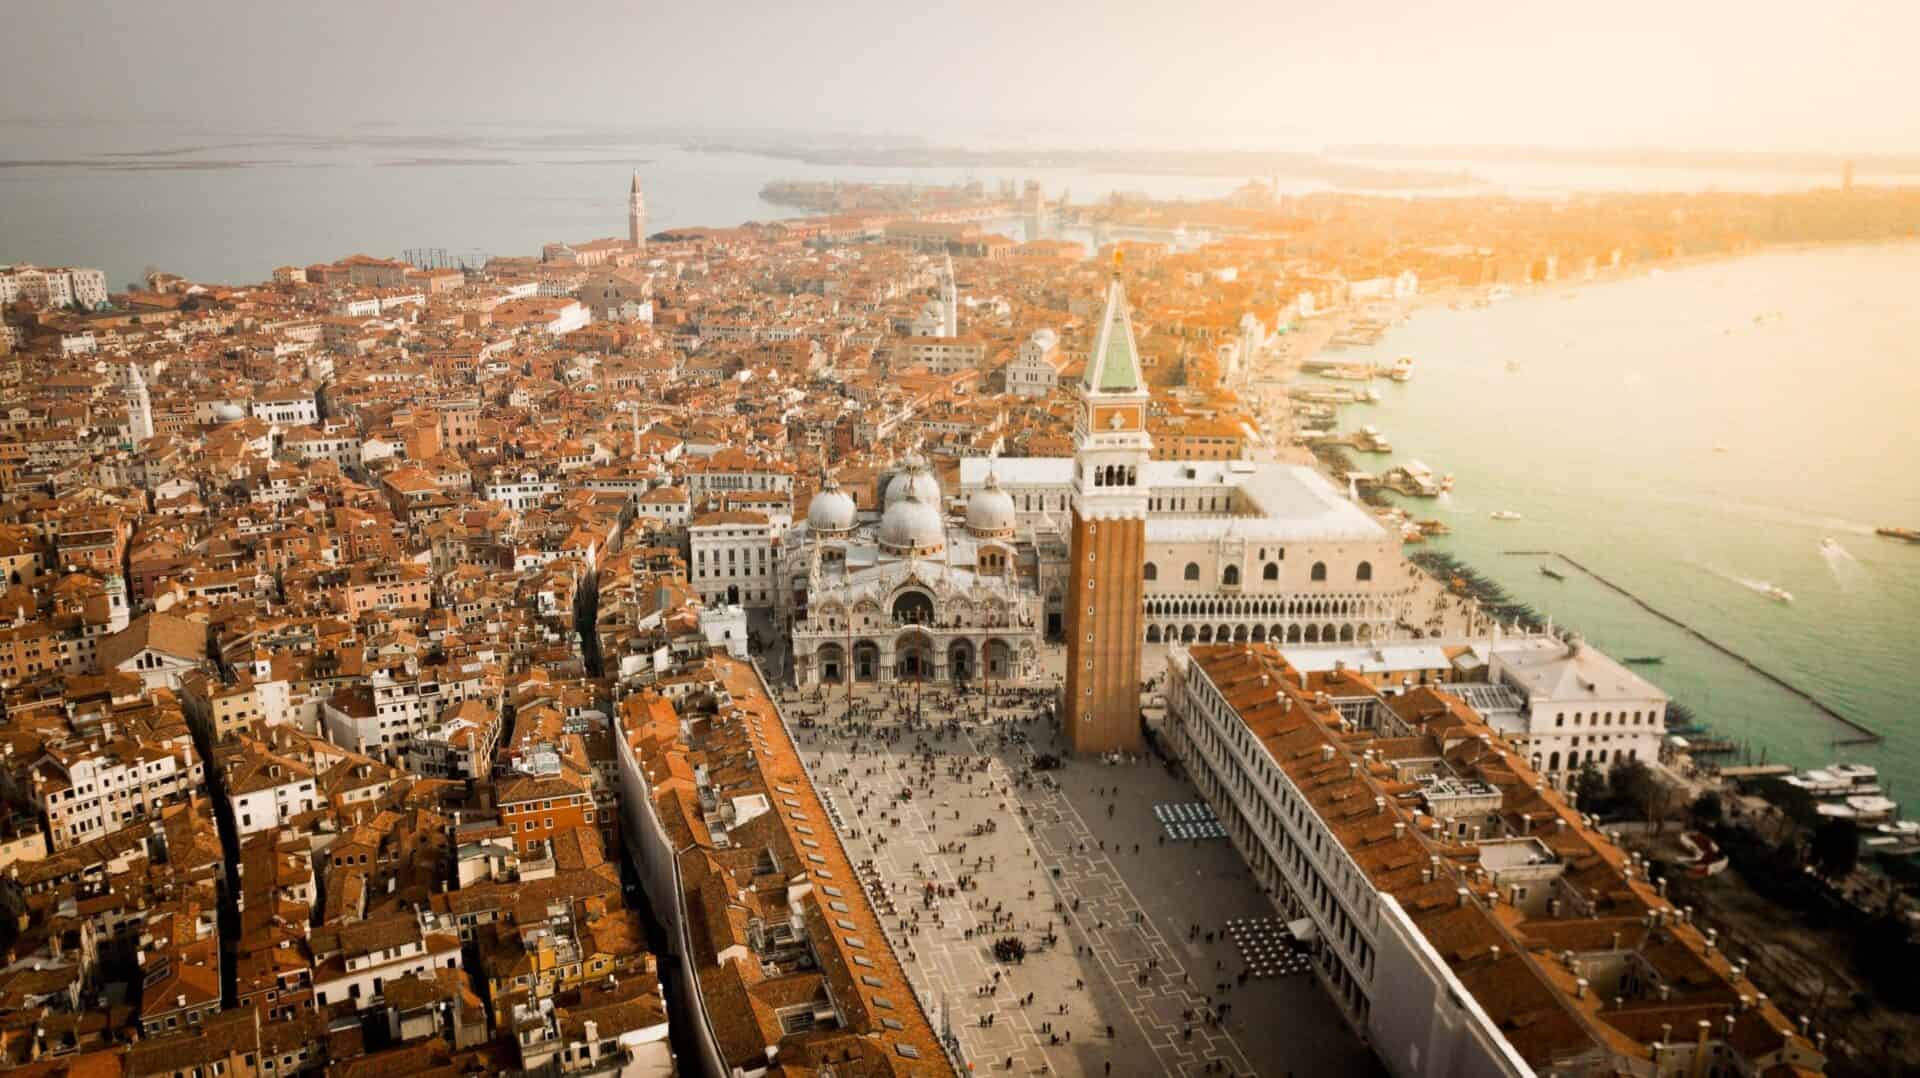 Drone shot of Saint Mark's Square in Venice